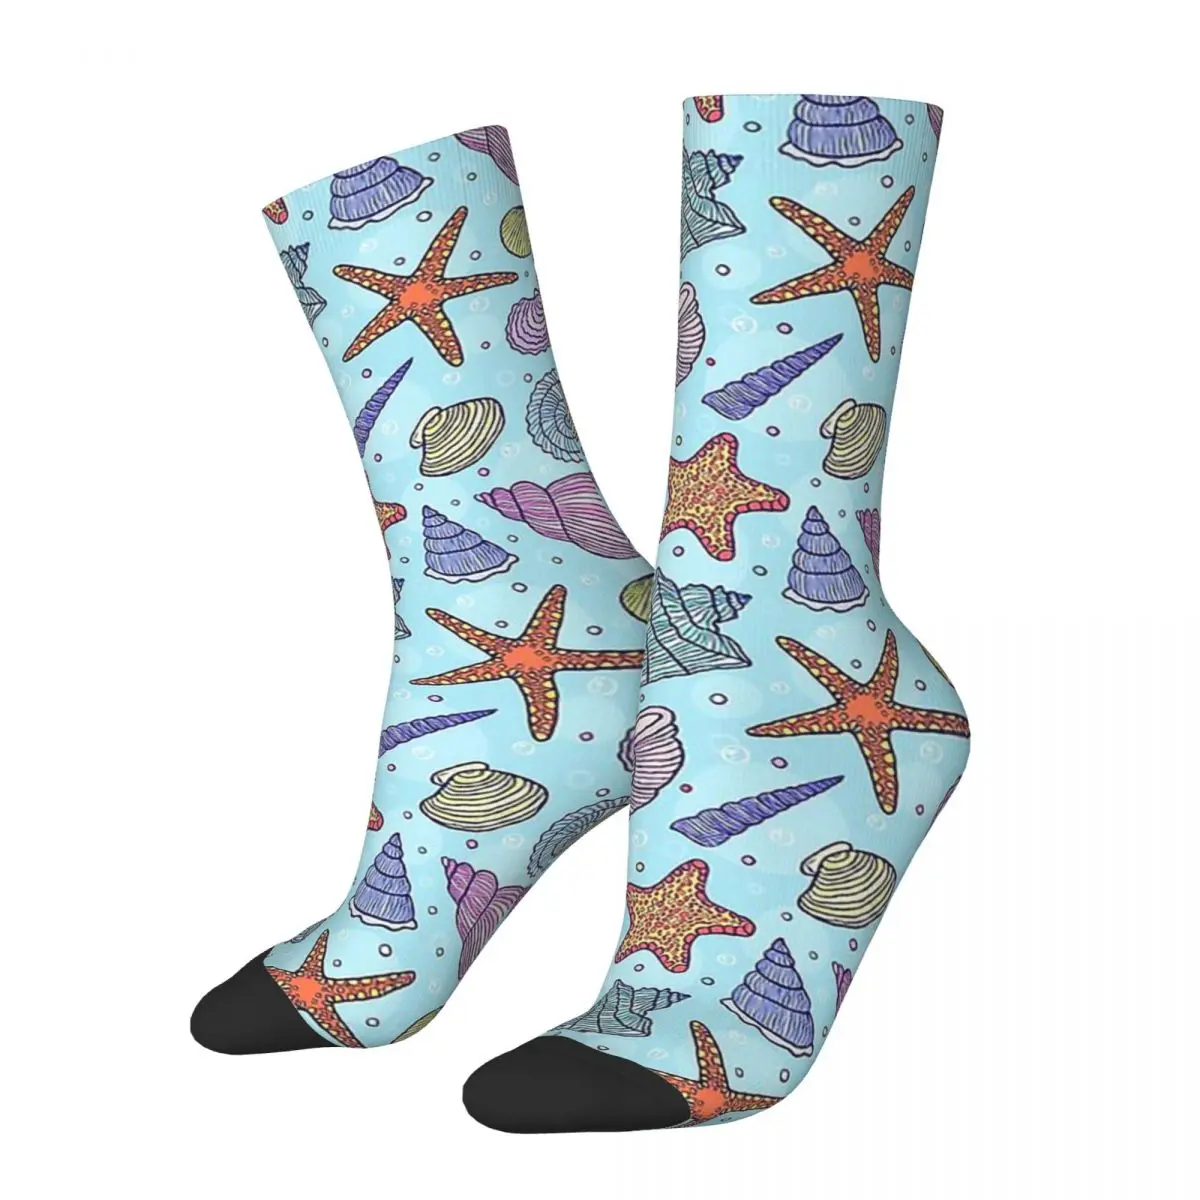 Funny Crazy Sock for Men Ocean Bathmat Hip Hop Vintage Ocean Pattern Happy Pattern Printed Boys Crew Sock Novelty Gift